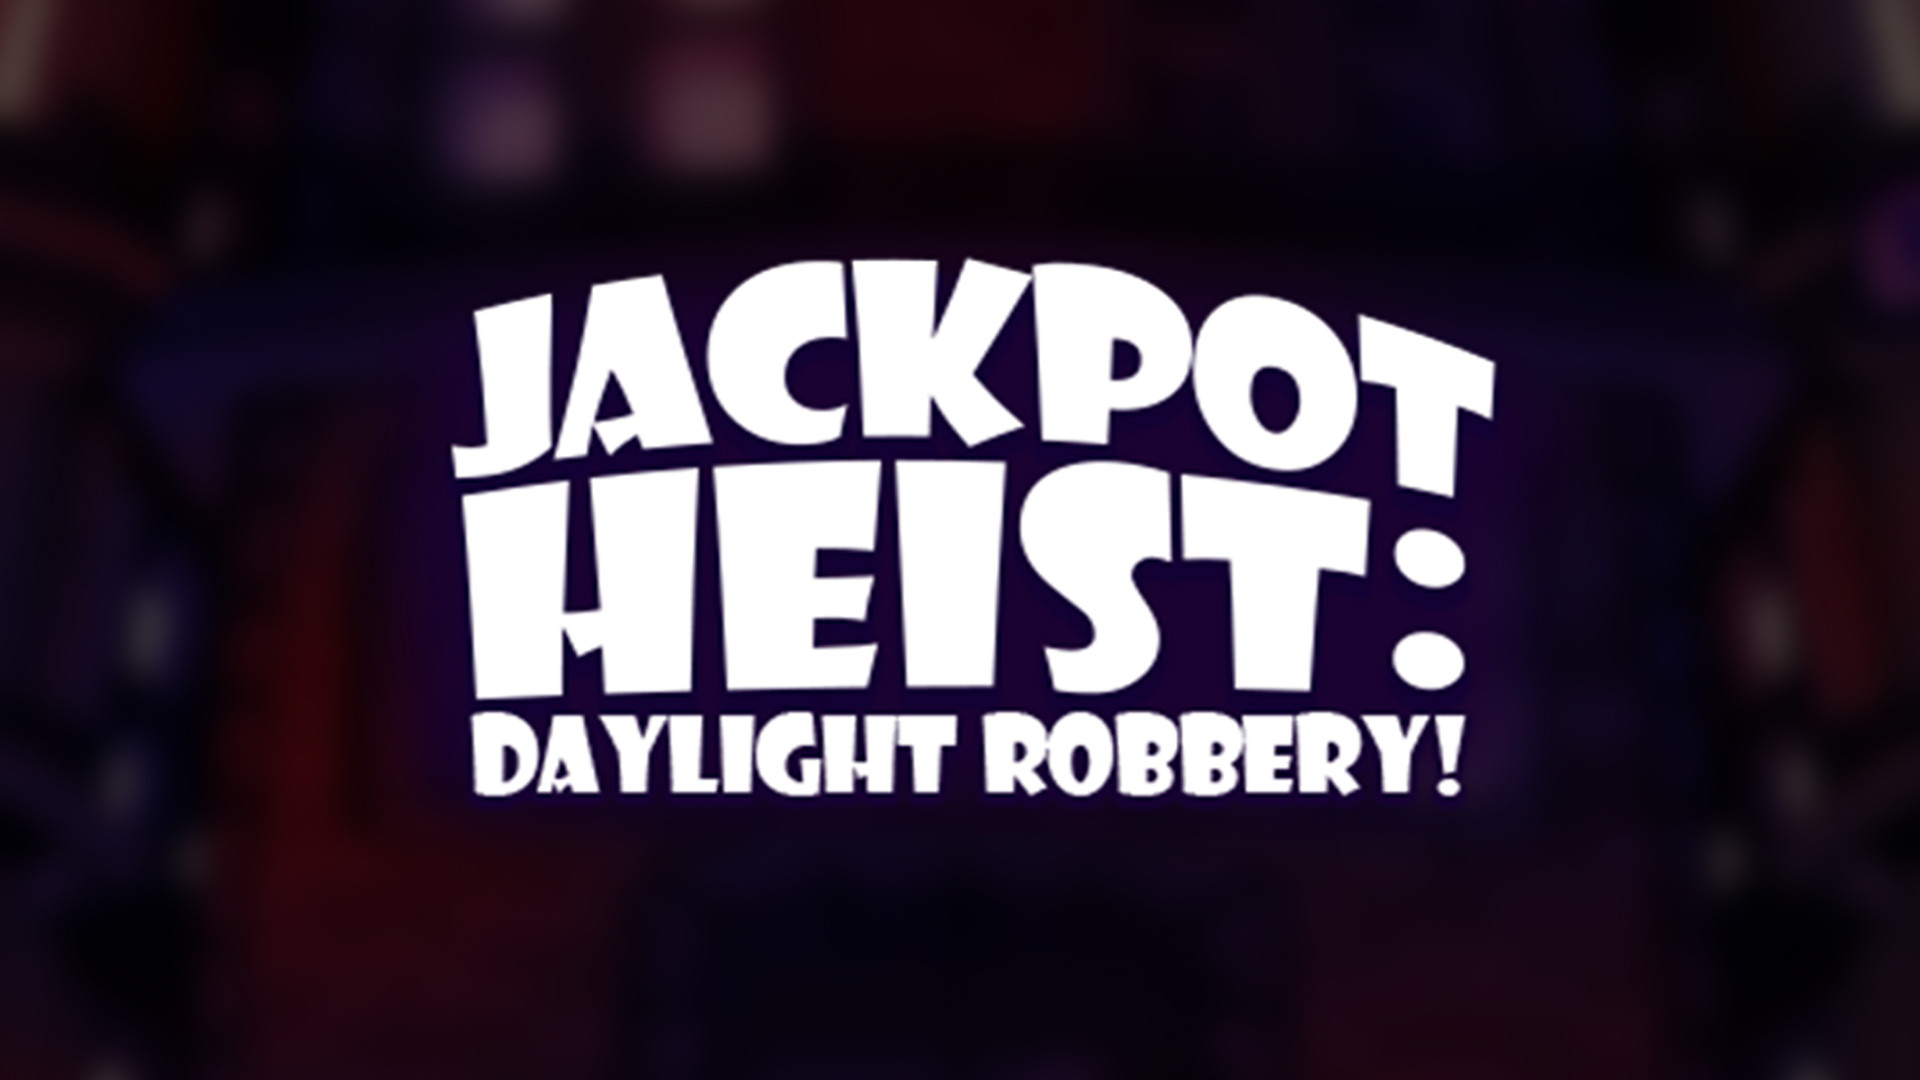 Jackpot Heist: Daylight Robbery!